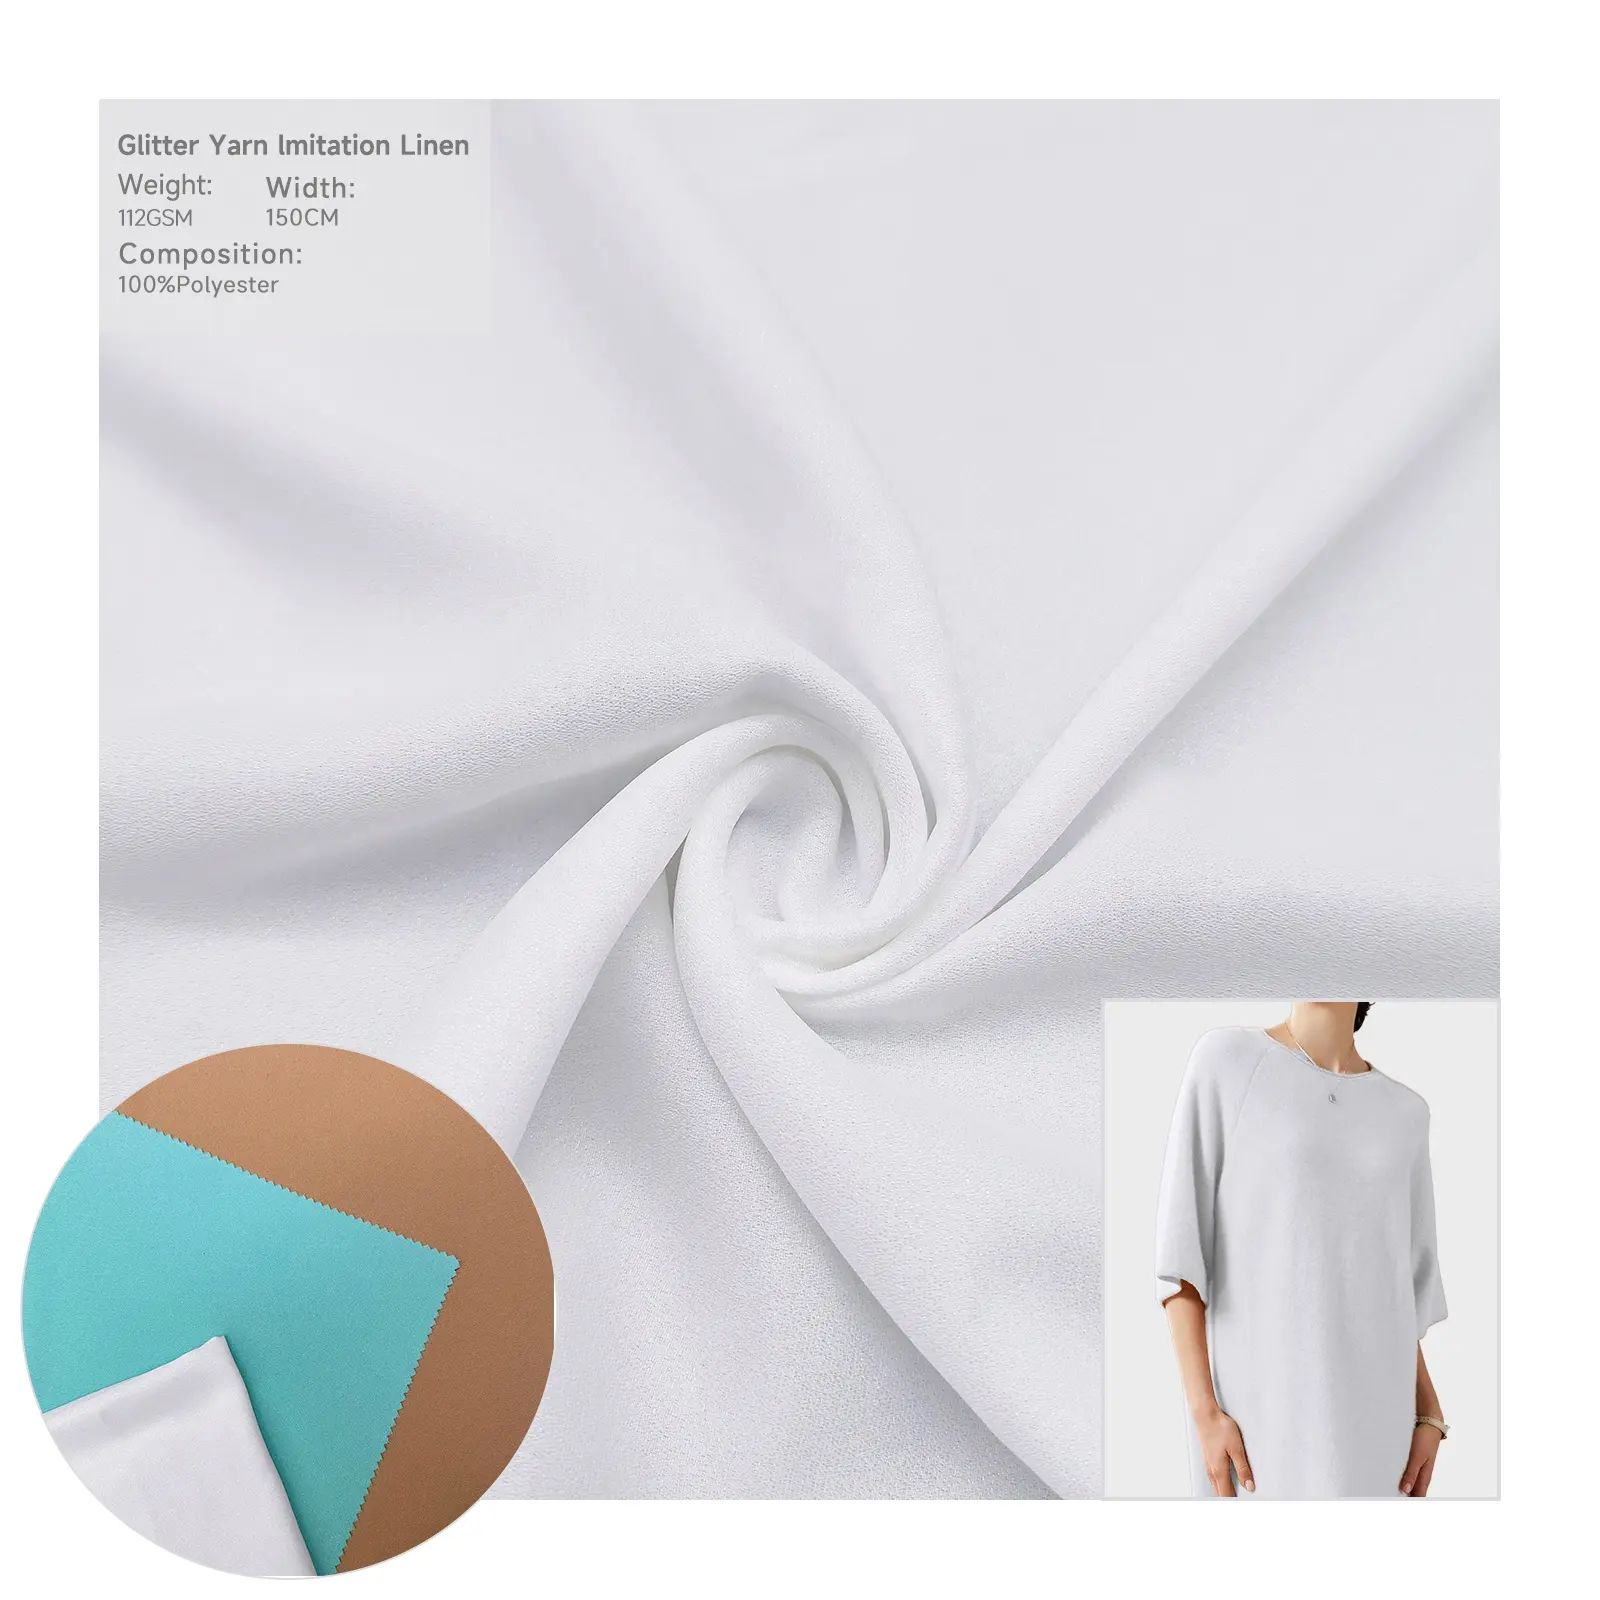 High end casual vest fabric imitation hemp spandex chiffon anti-wrinkle fabric for clothing